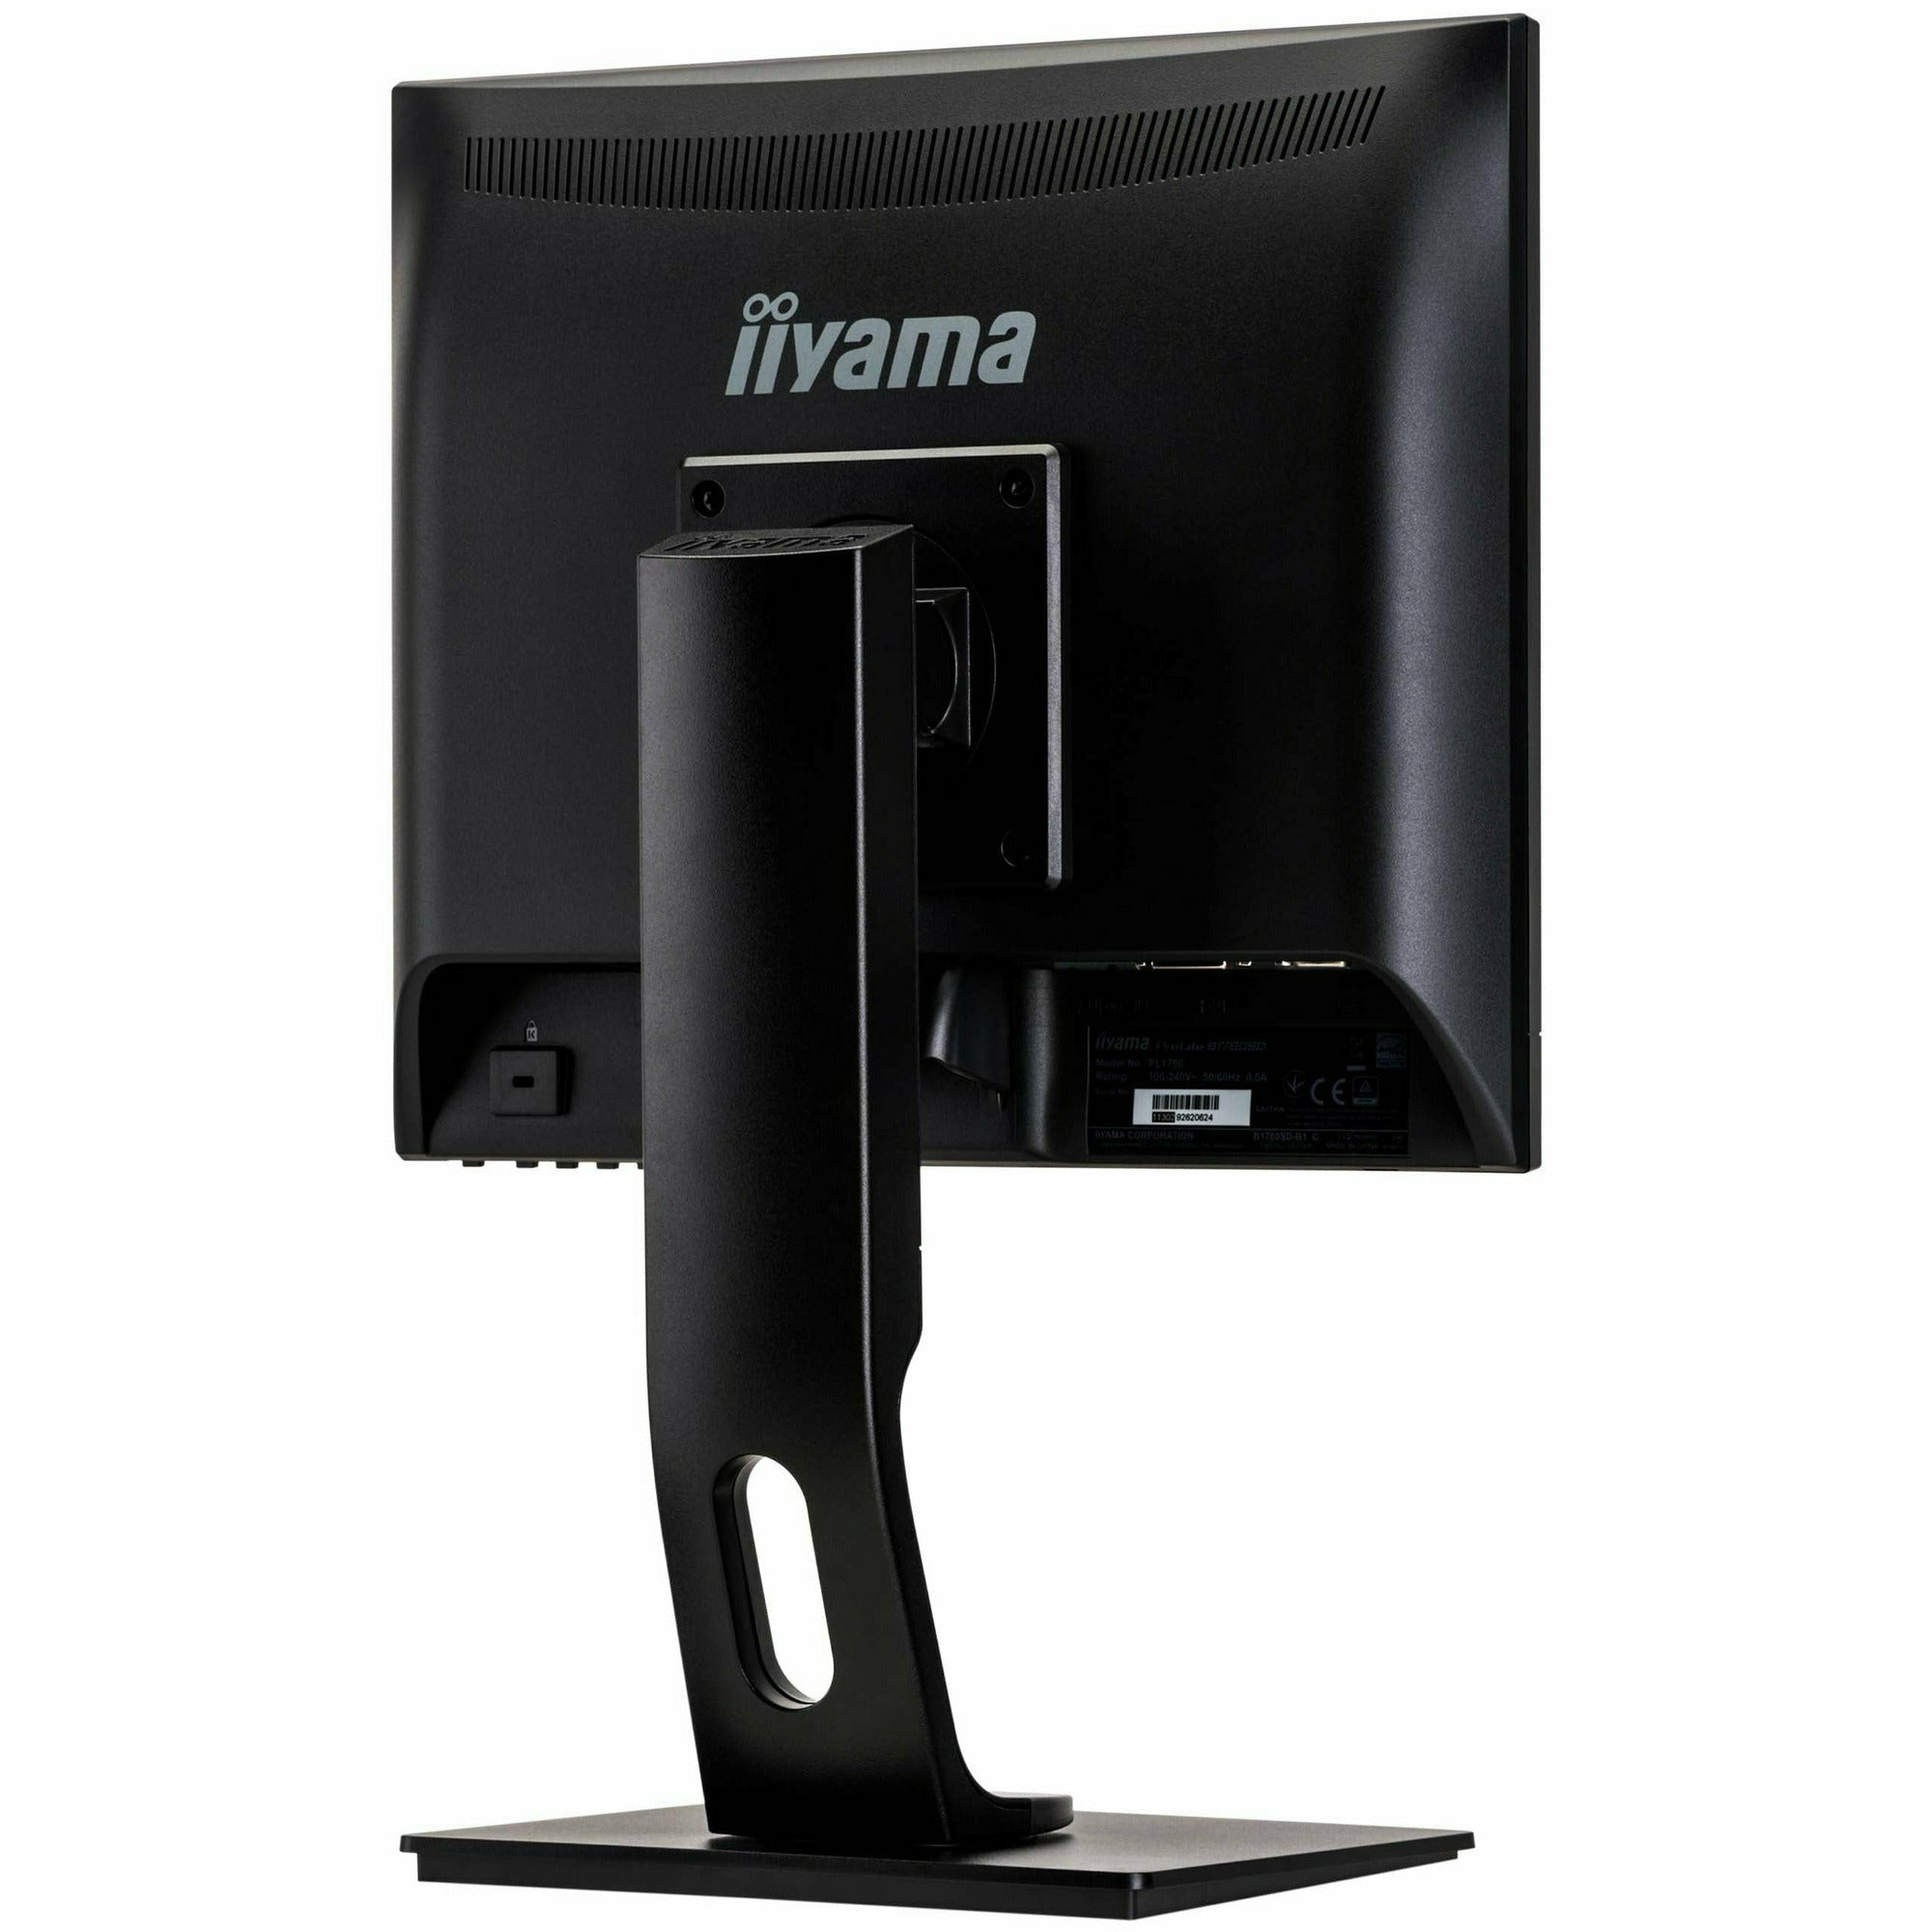 iiyama ProLite B1780SD-B1 17" TN LCD-backlit Monitor